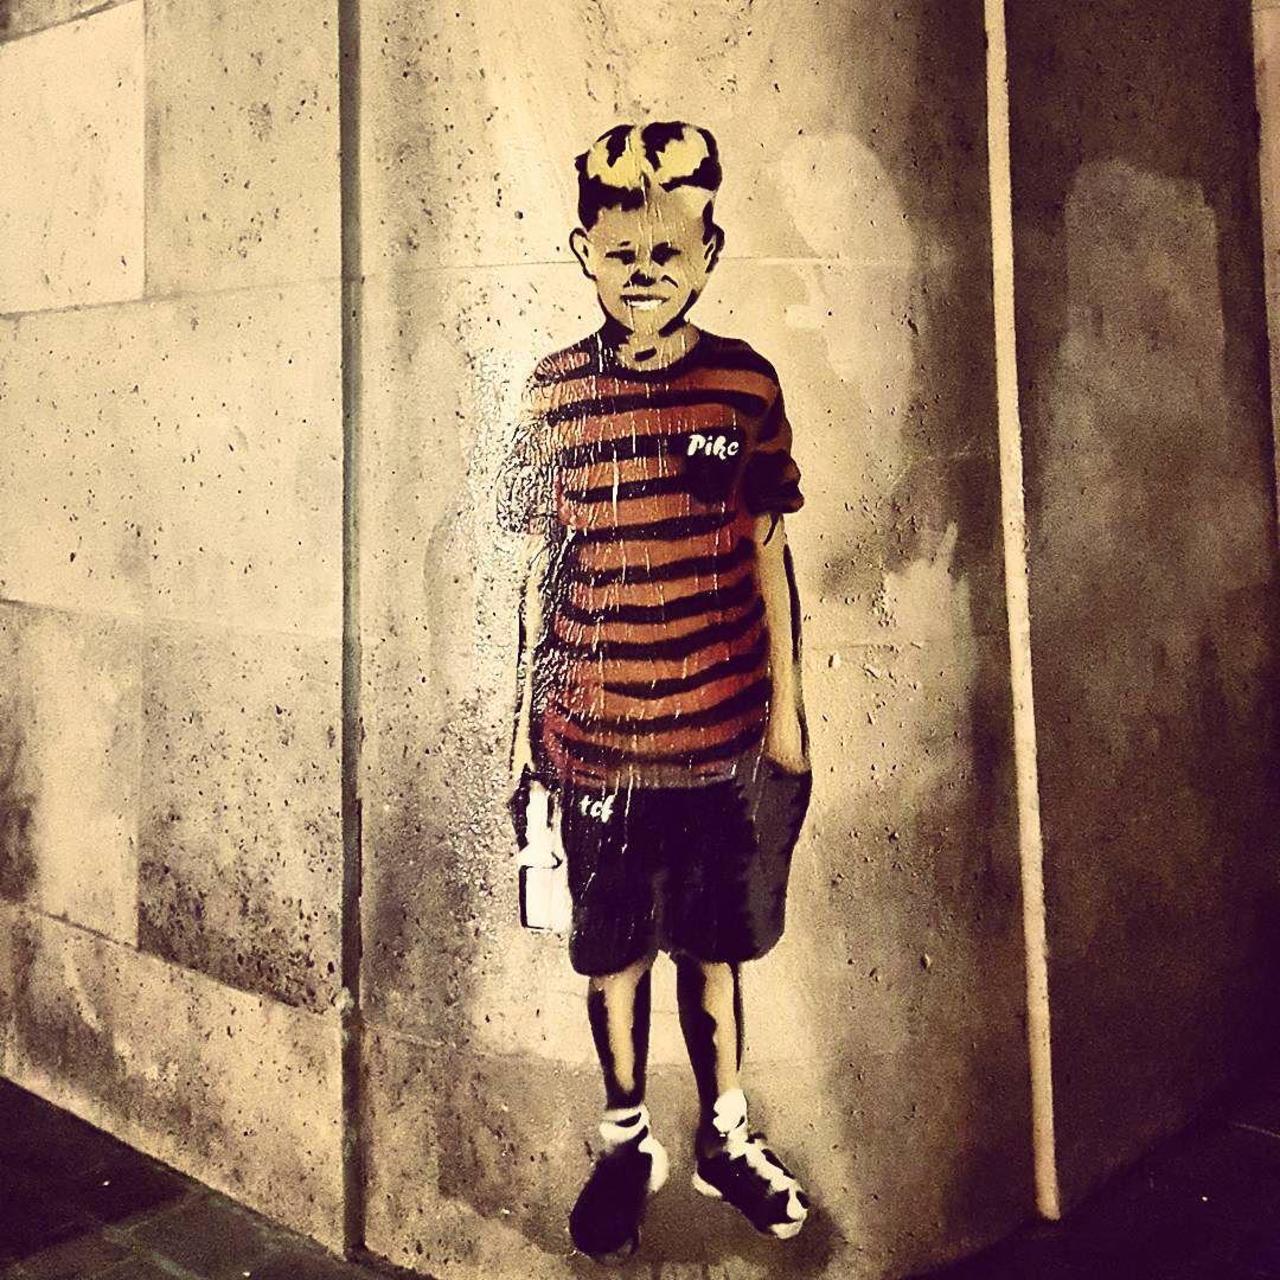 #Paris #graffiti photo by @the169 http://ift.tt/1WGZLq2 #StreetArt http://t.co/0NzeAFALHv